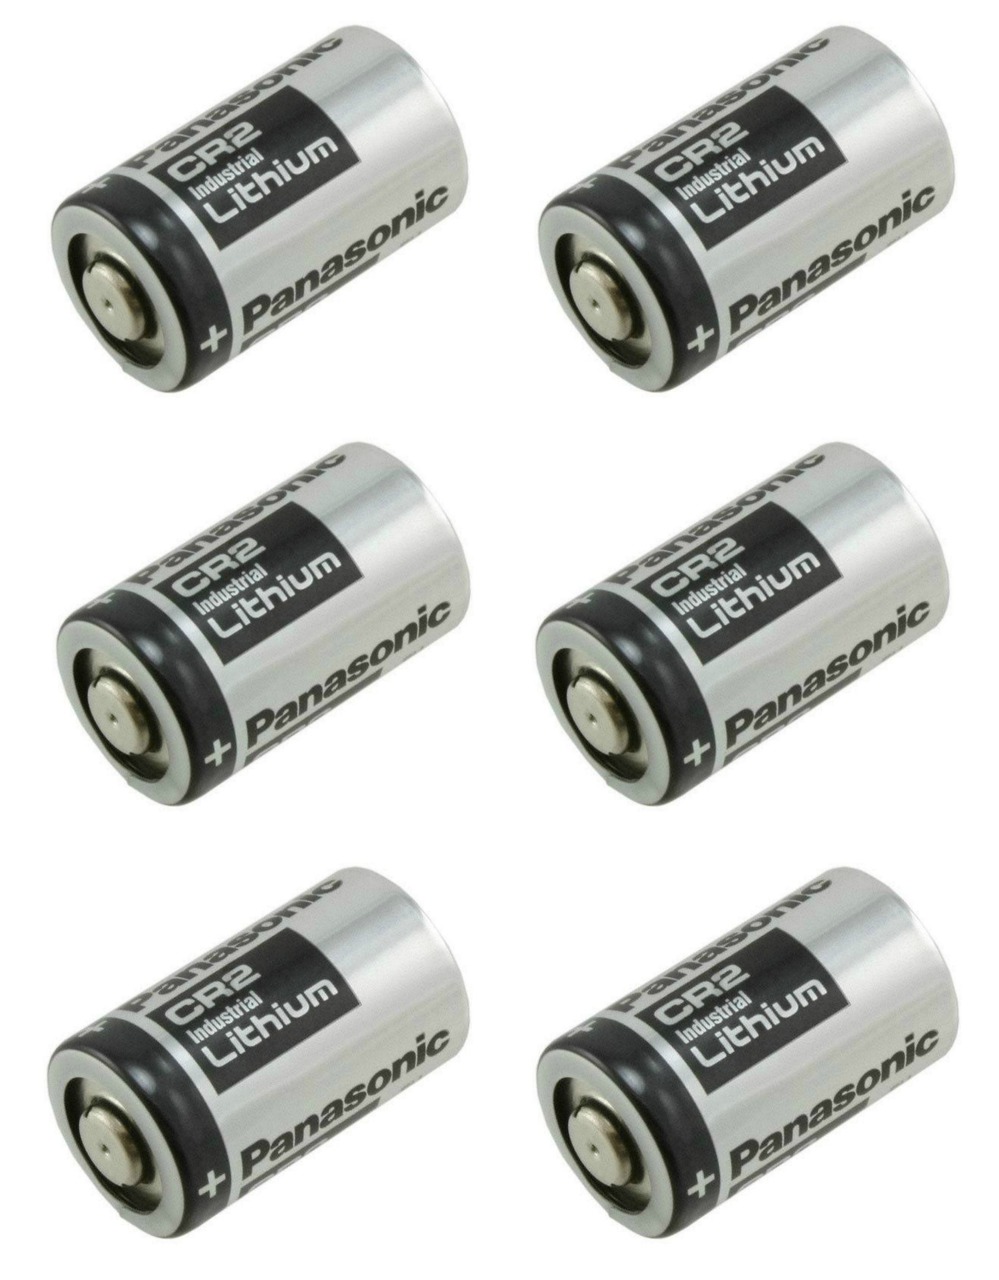 Panasonic CR2 3.0V Photo Lithium Battery - 6 Pack + FREE SHIPPING!